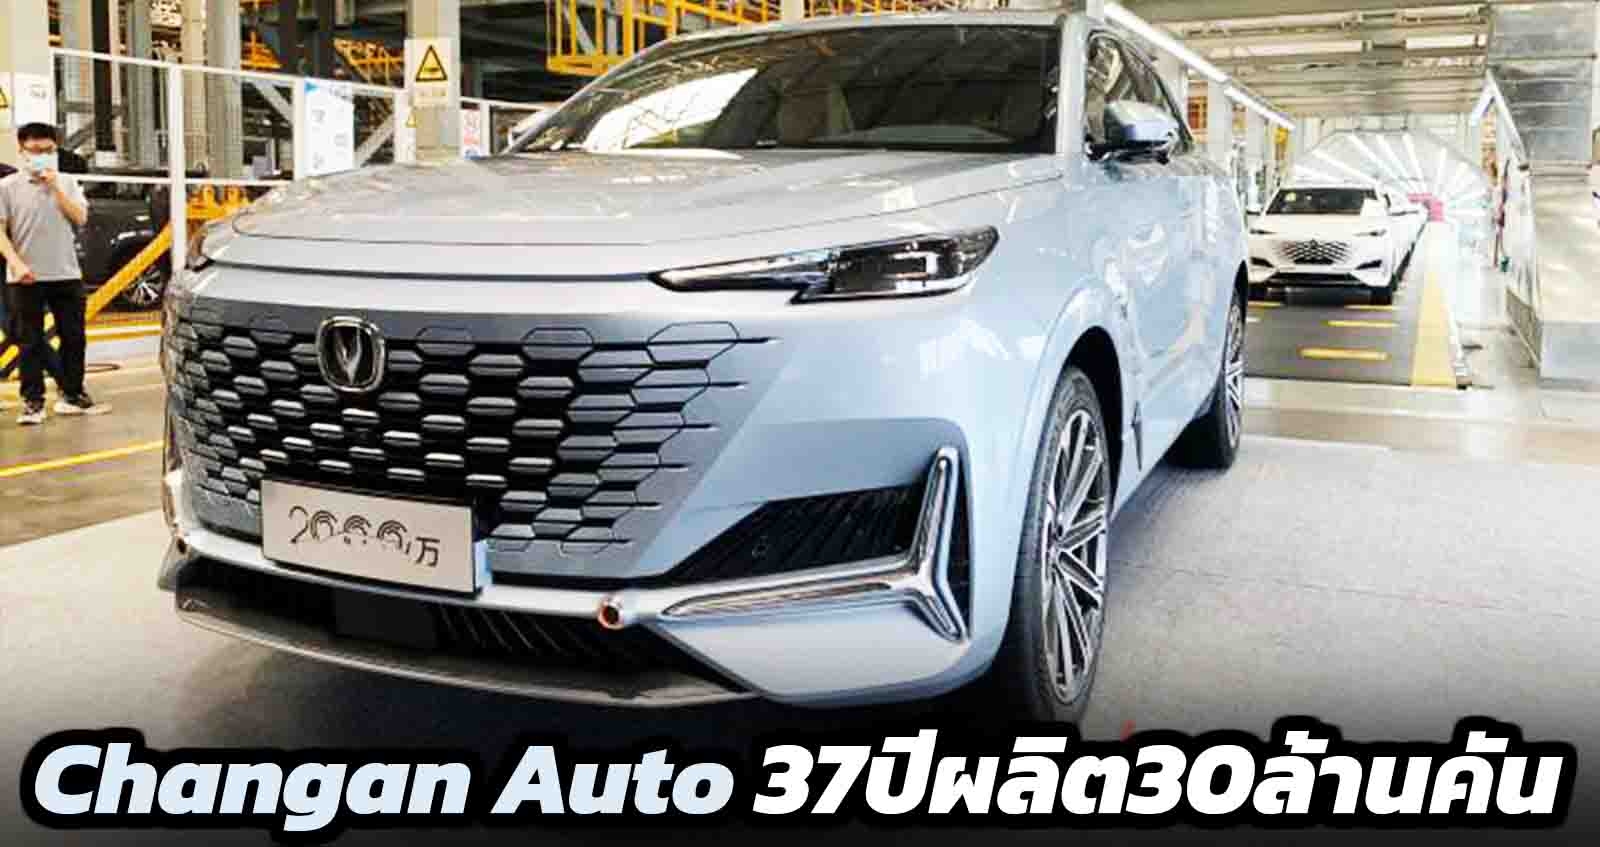 Changan Automobile ฉลองผลิตรถยนต์ครบ 20 ล้านคัน ใช้เวลา 37 ปี